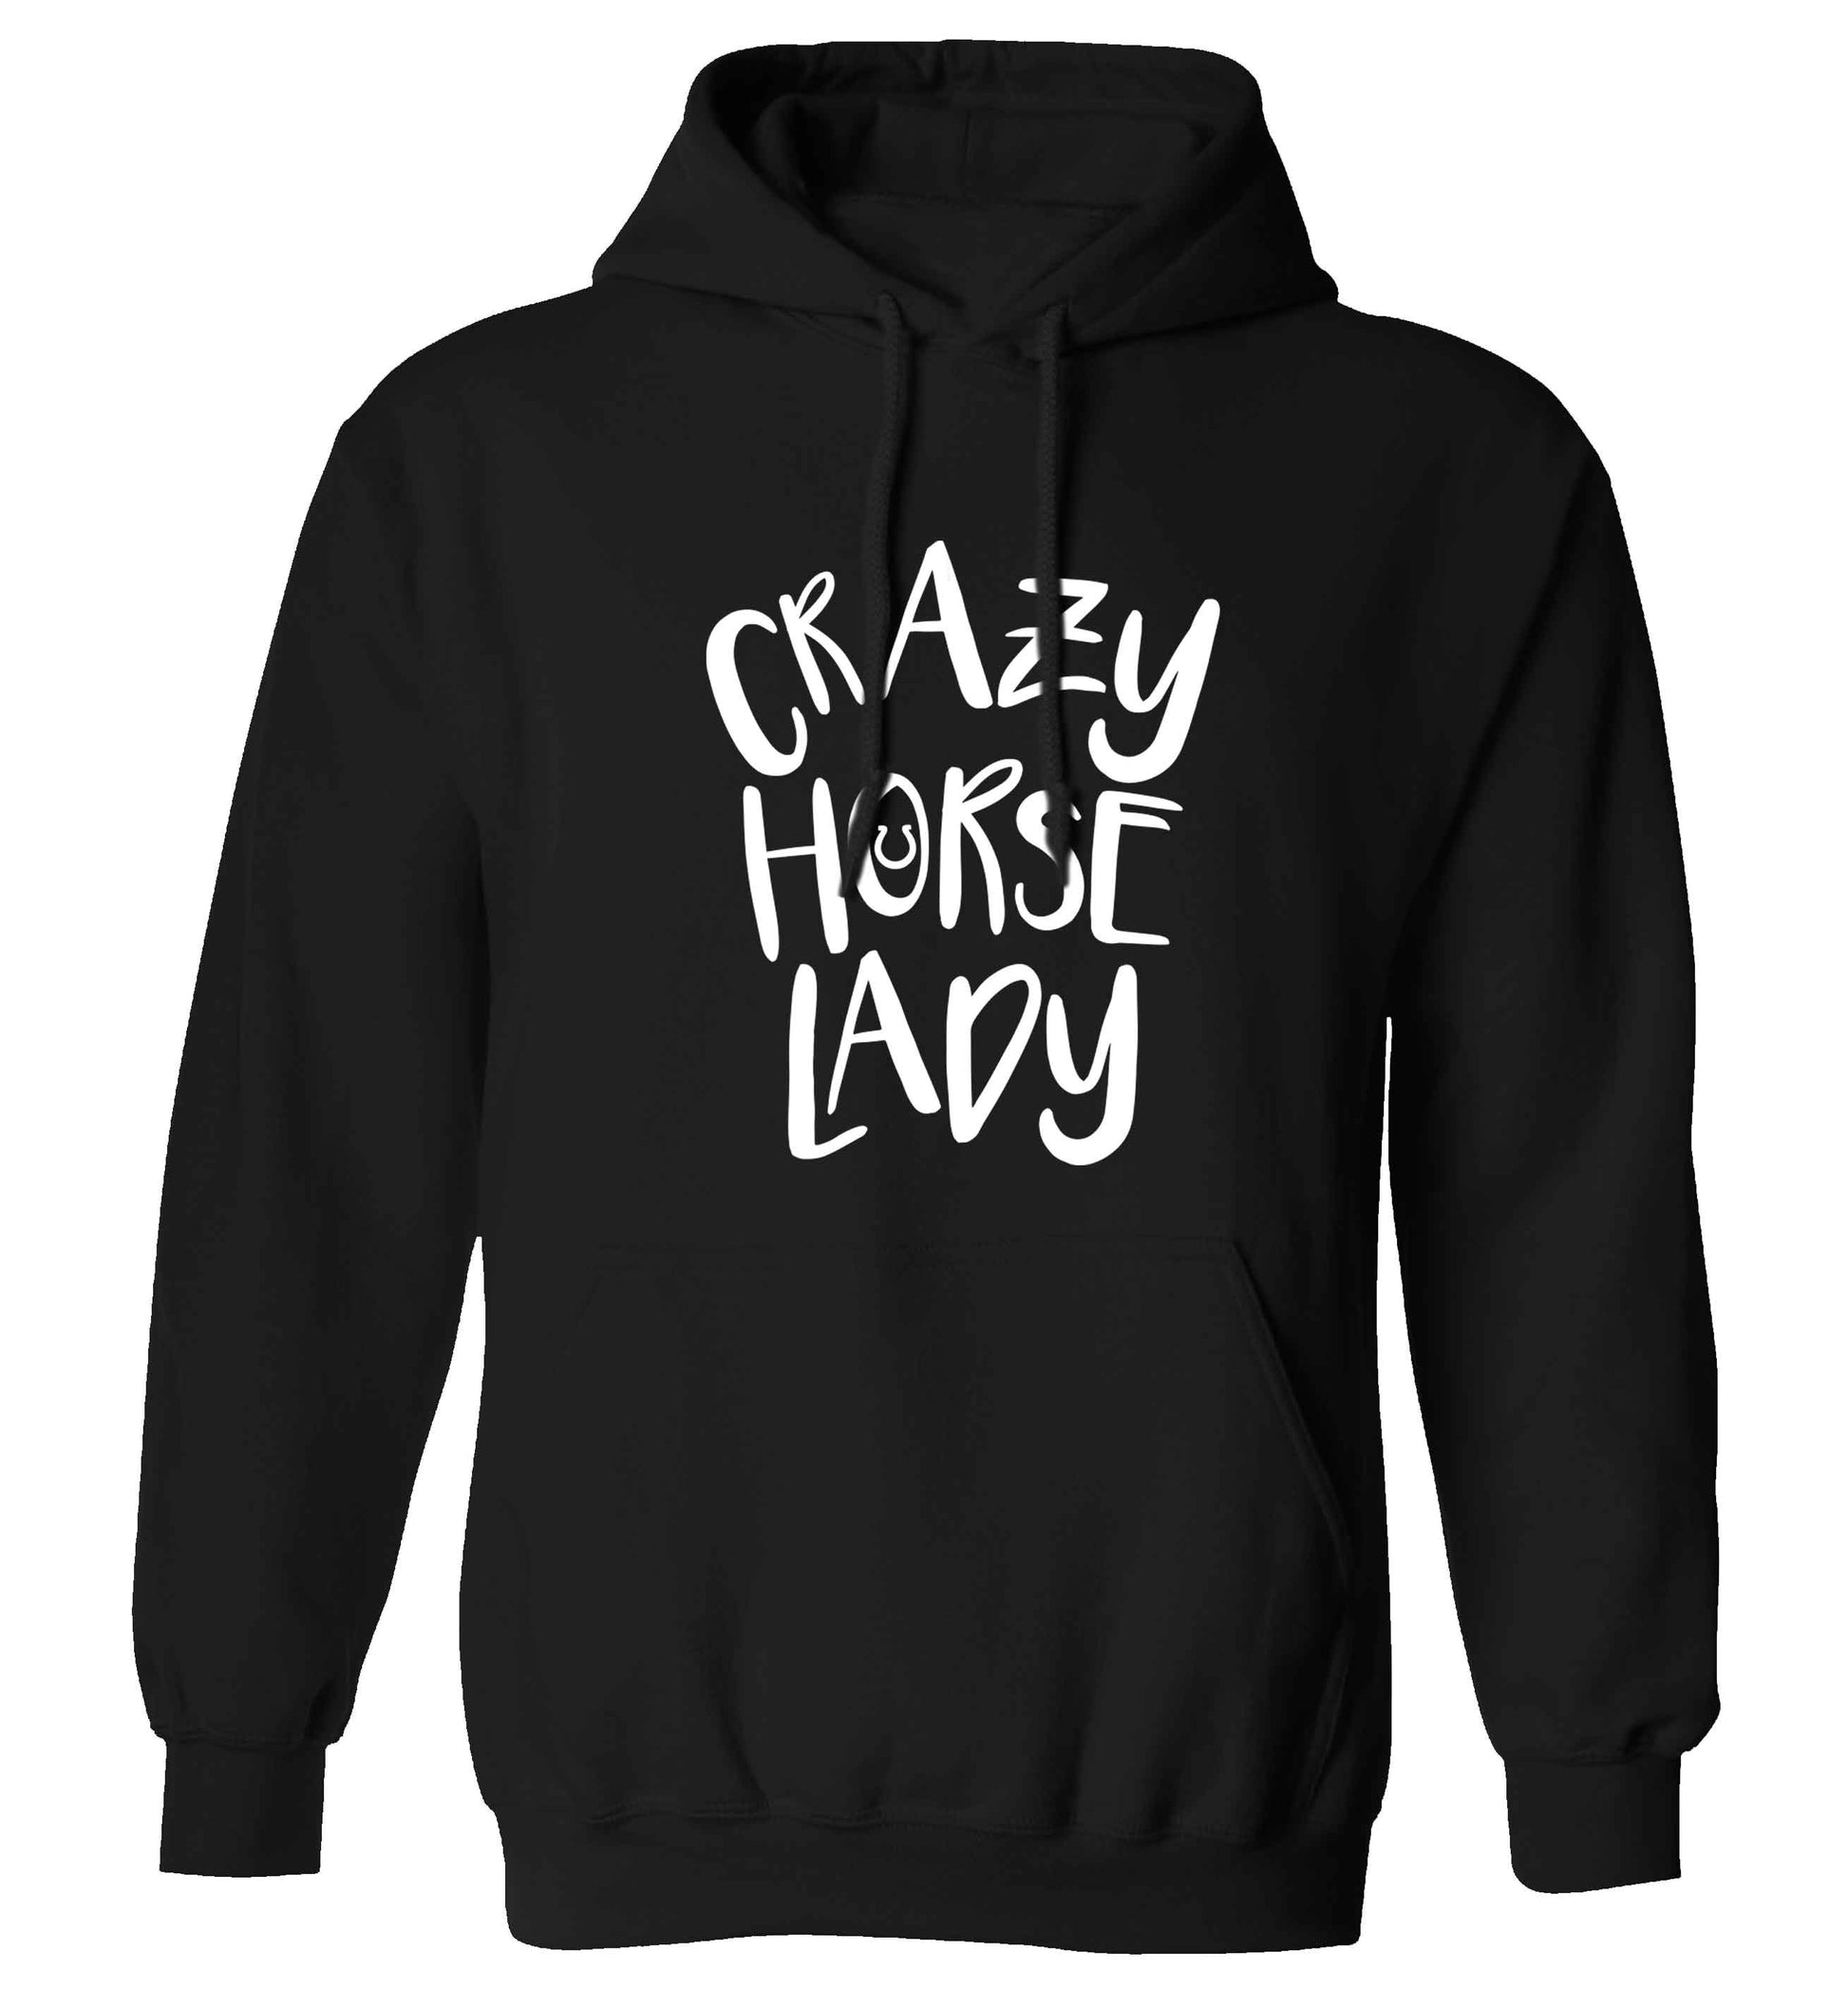 Crazy horse lady adults unisex black hoodie 2XL